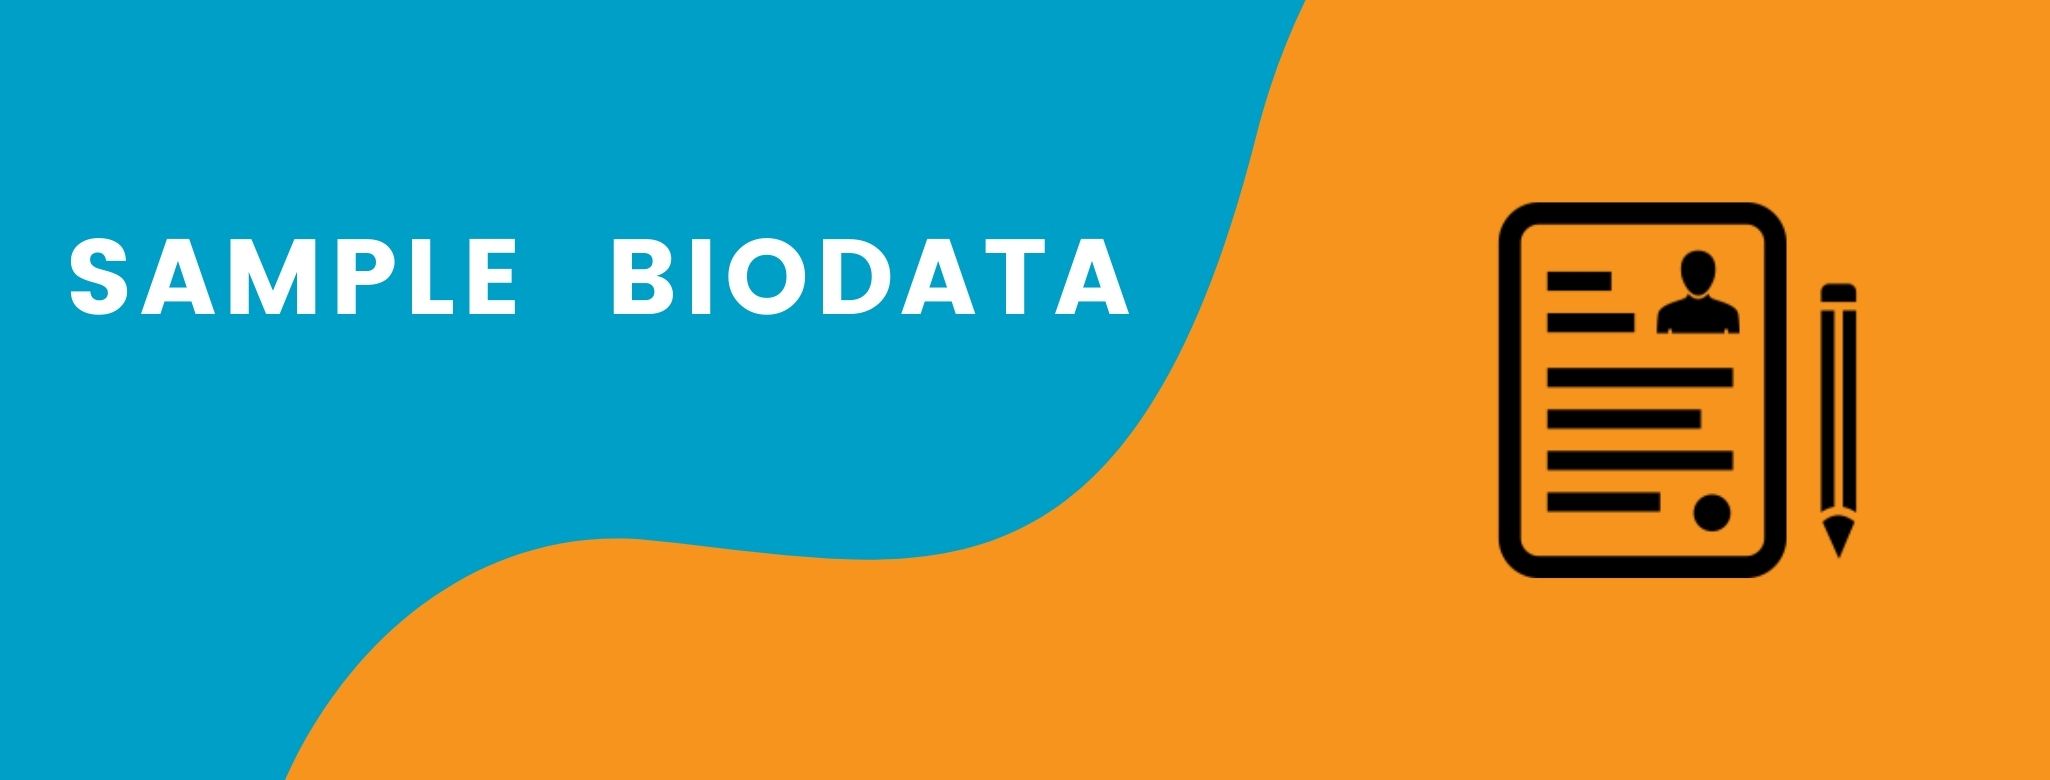 Sample Biodata